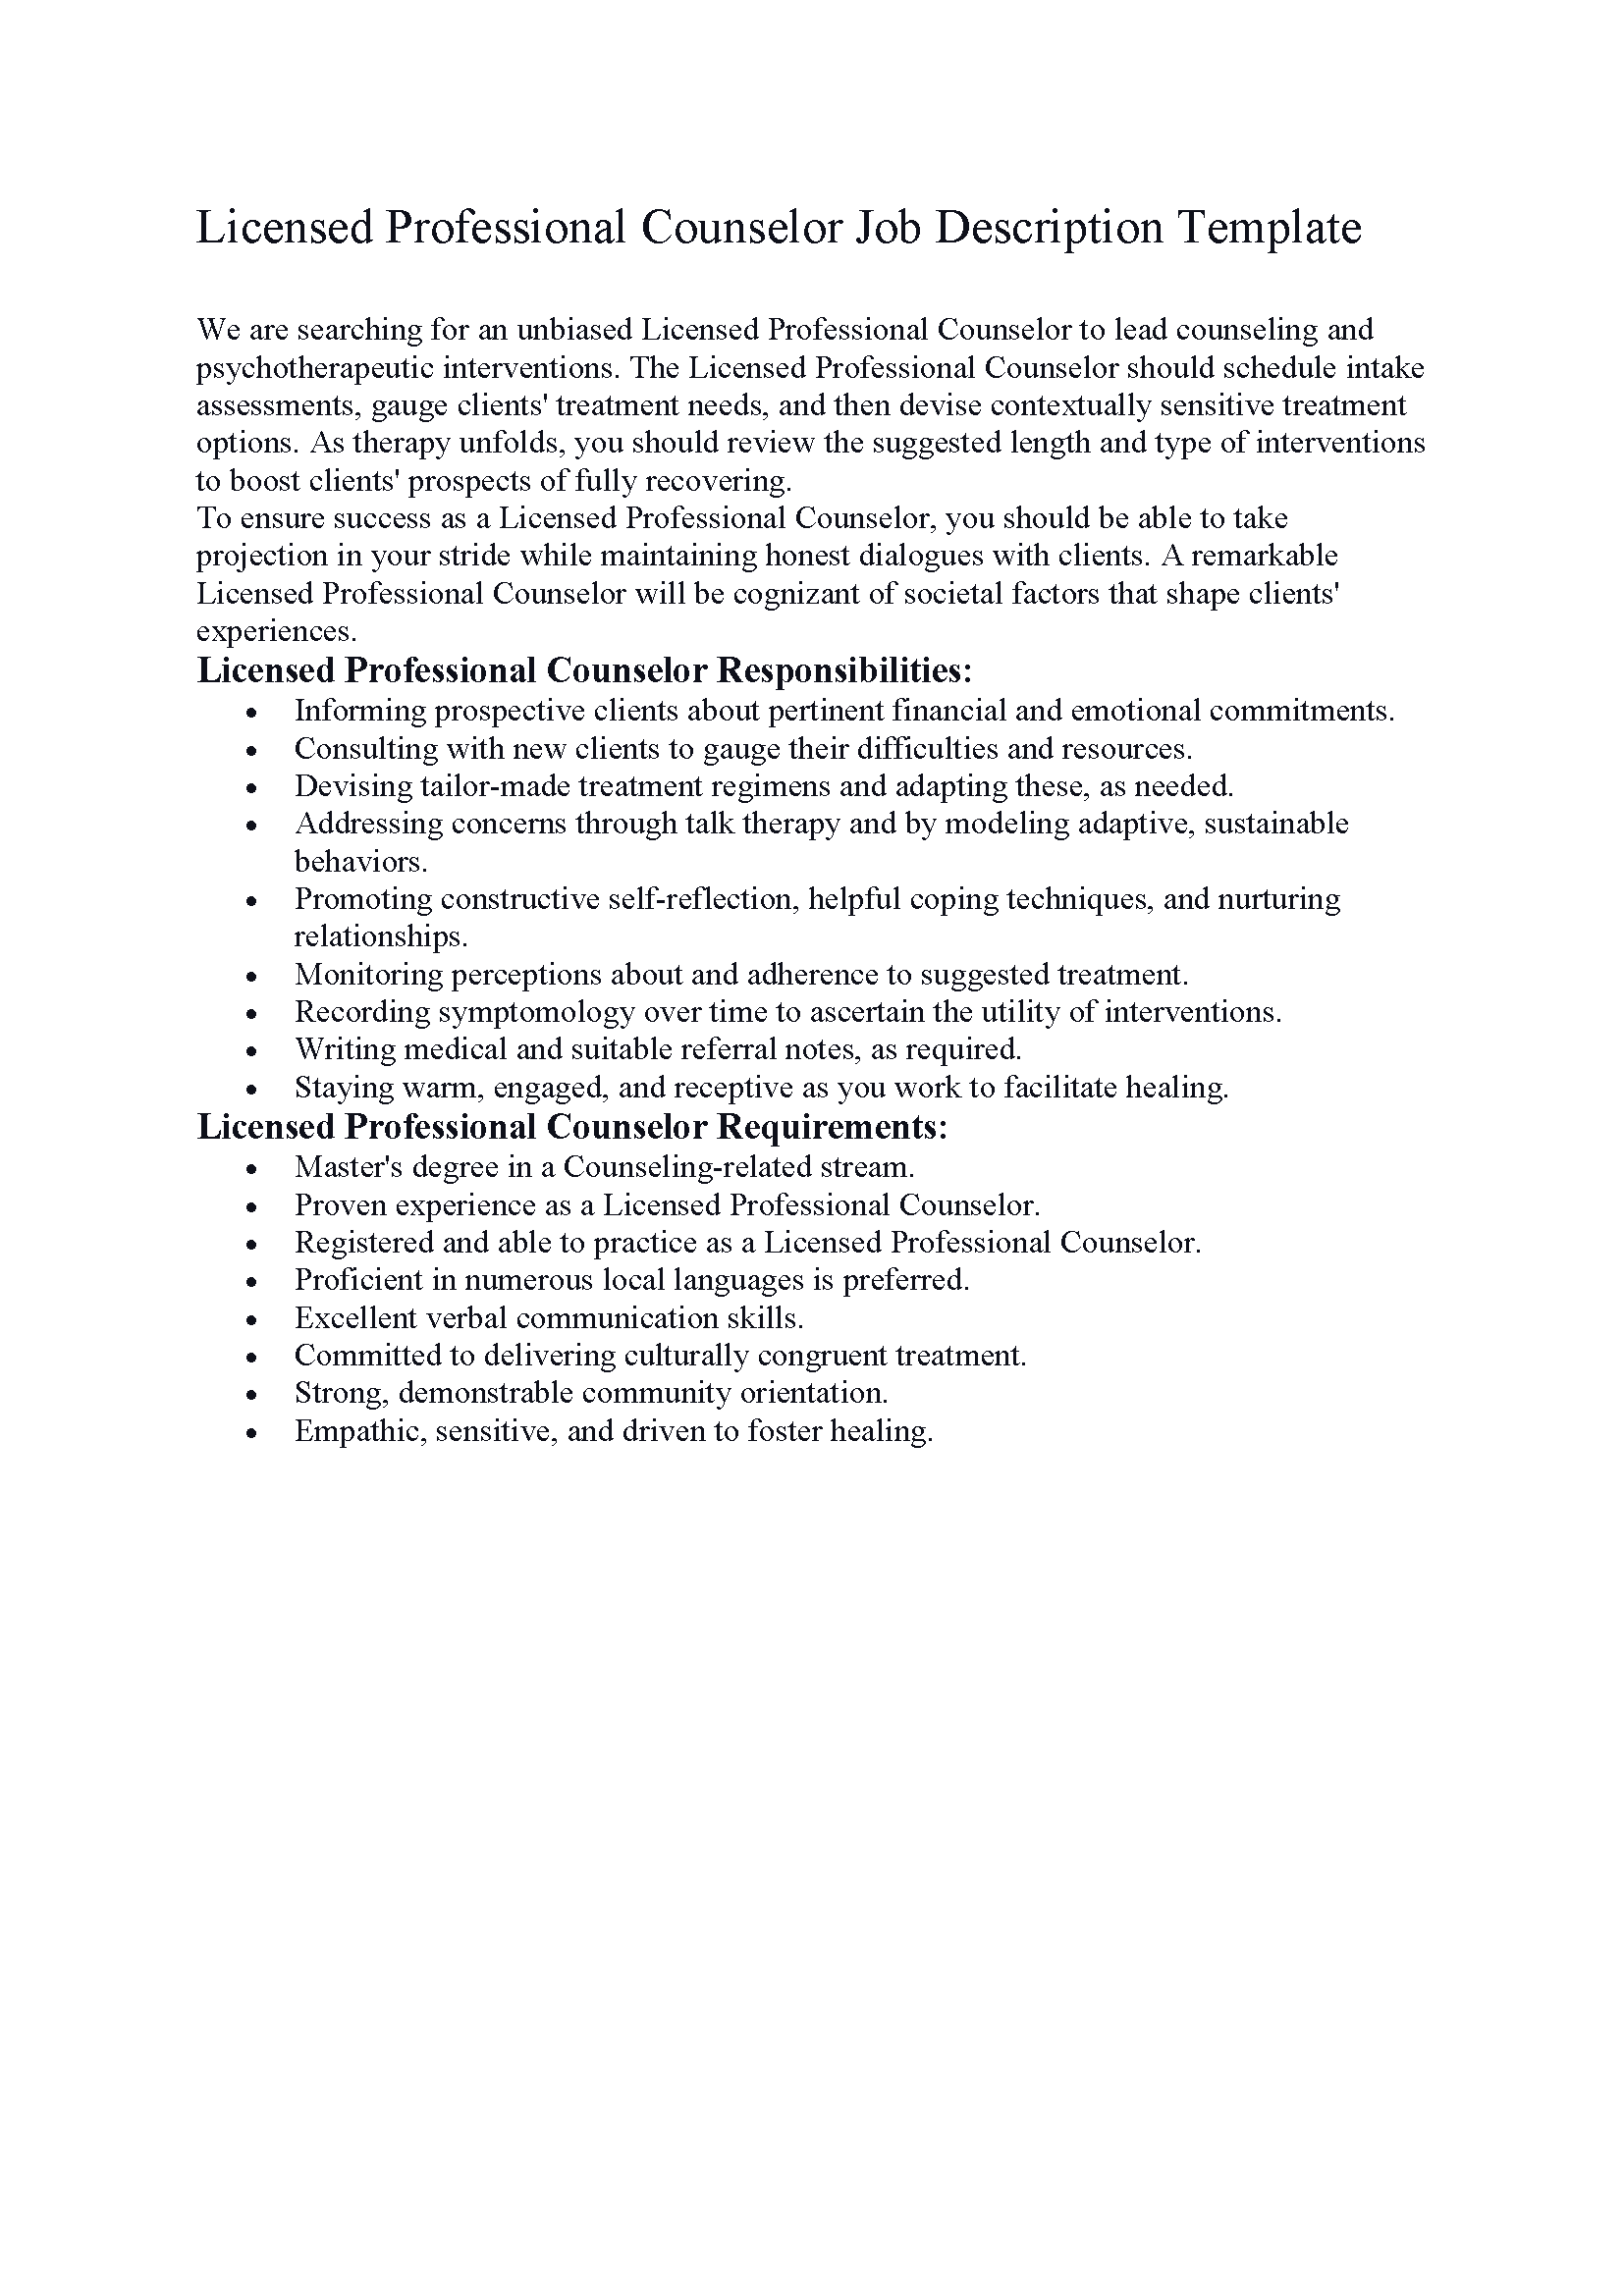 Licensed Professional Counselor Job Description Template